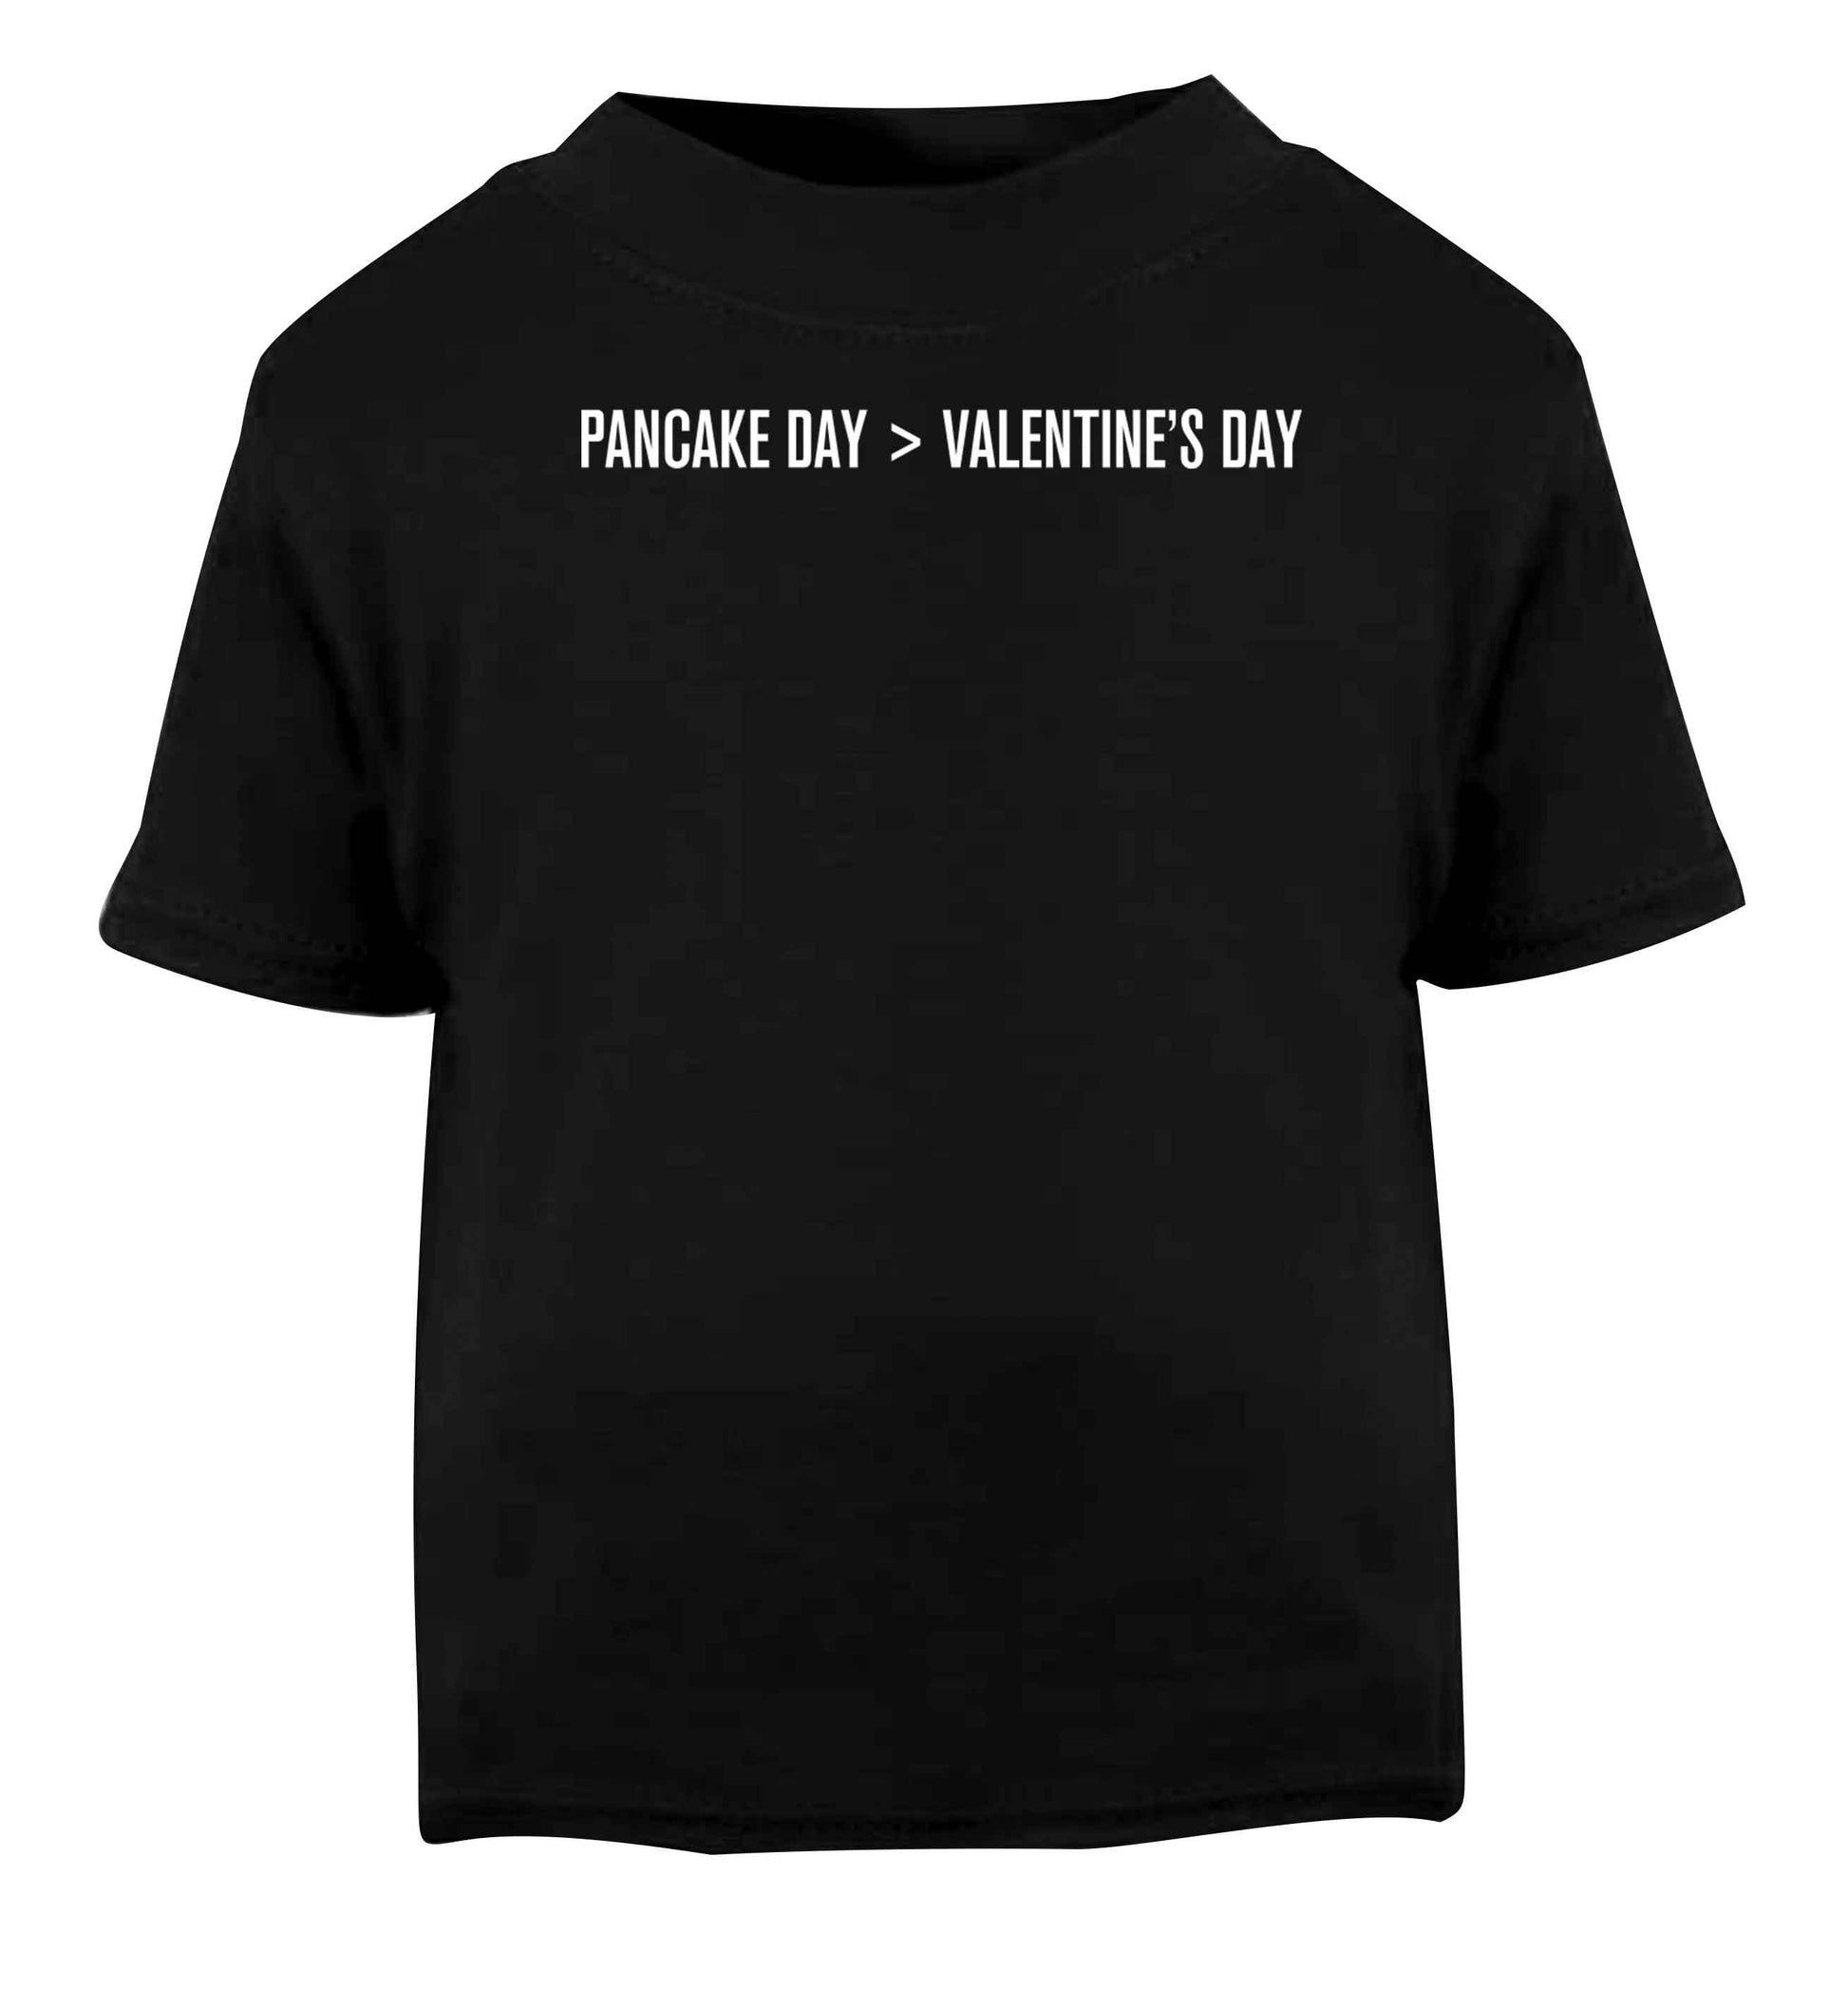 Pancake day > valentines day Black baby toddler Tshirt 2 years